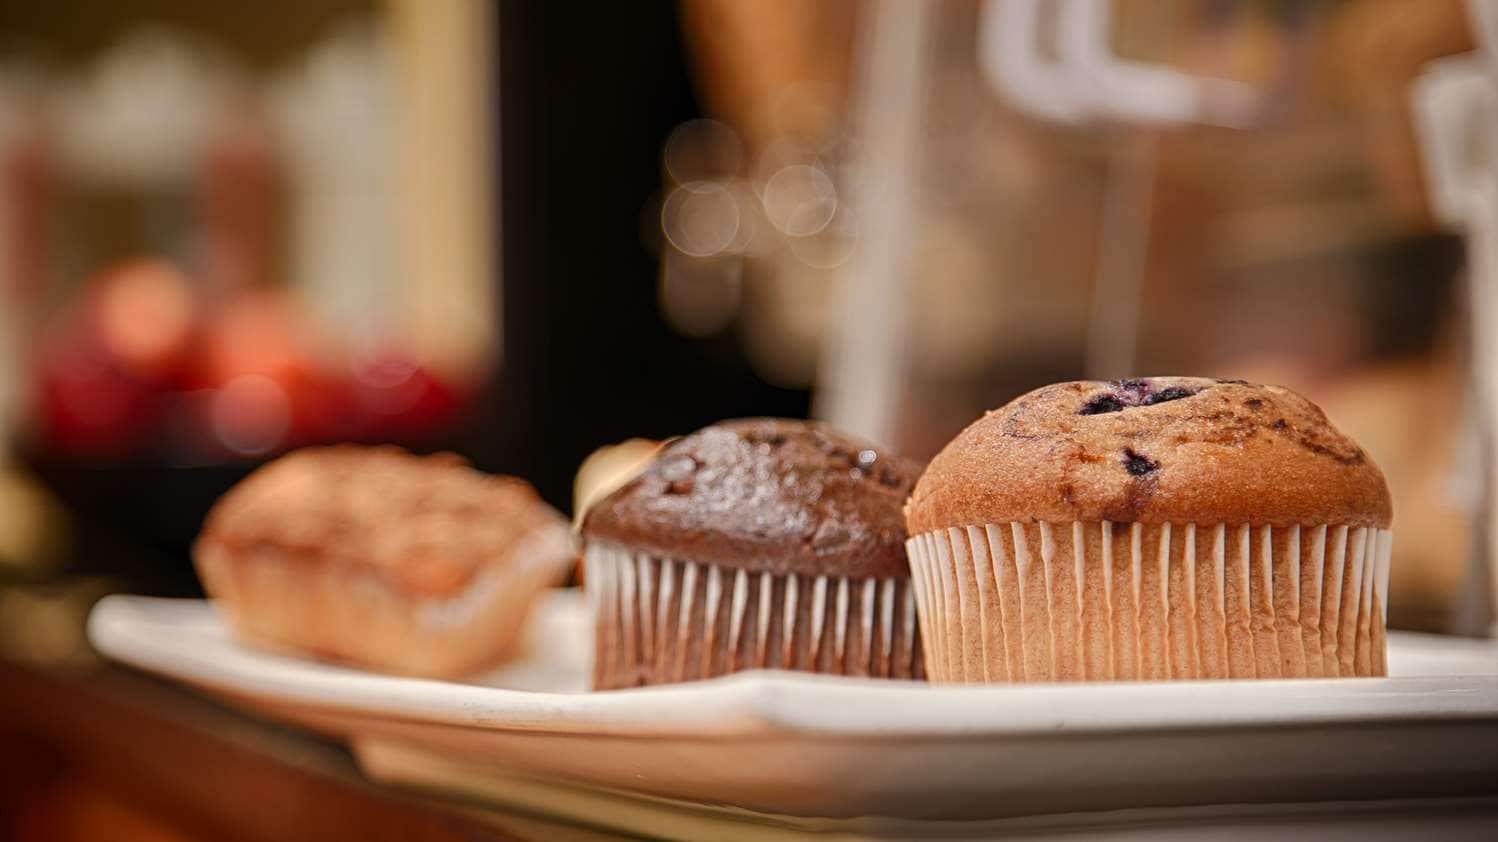 Muffin Break celebrates 65th store opening